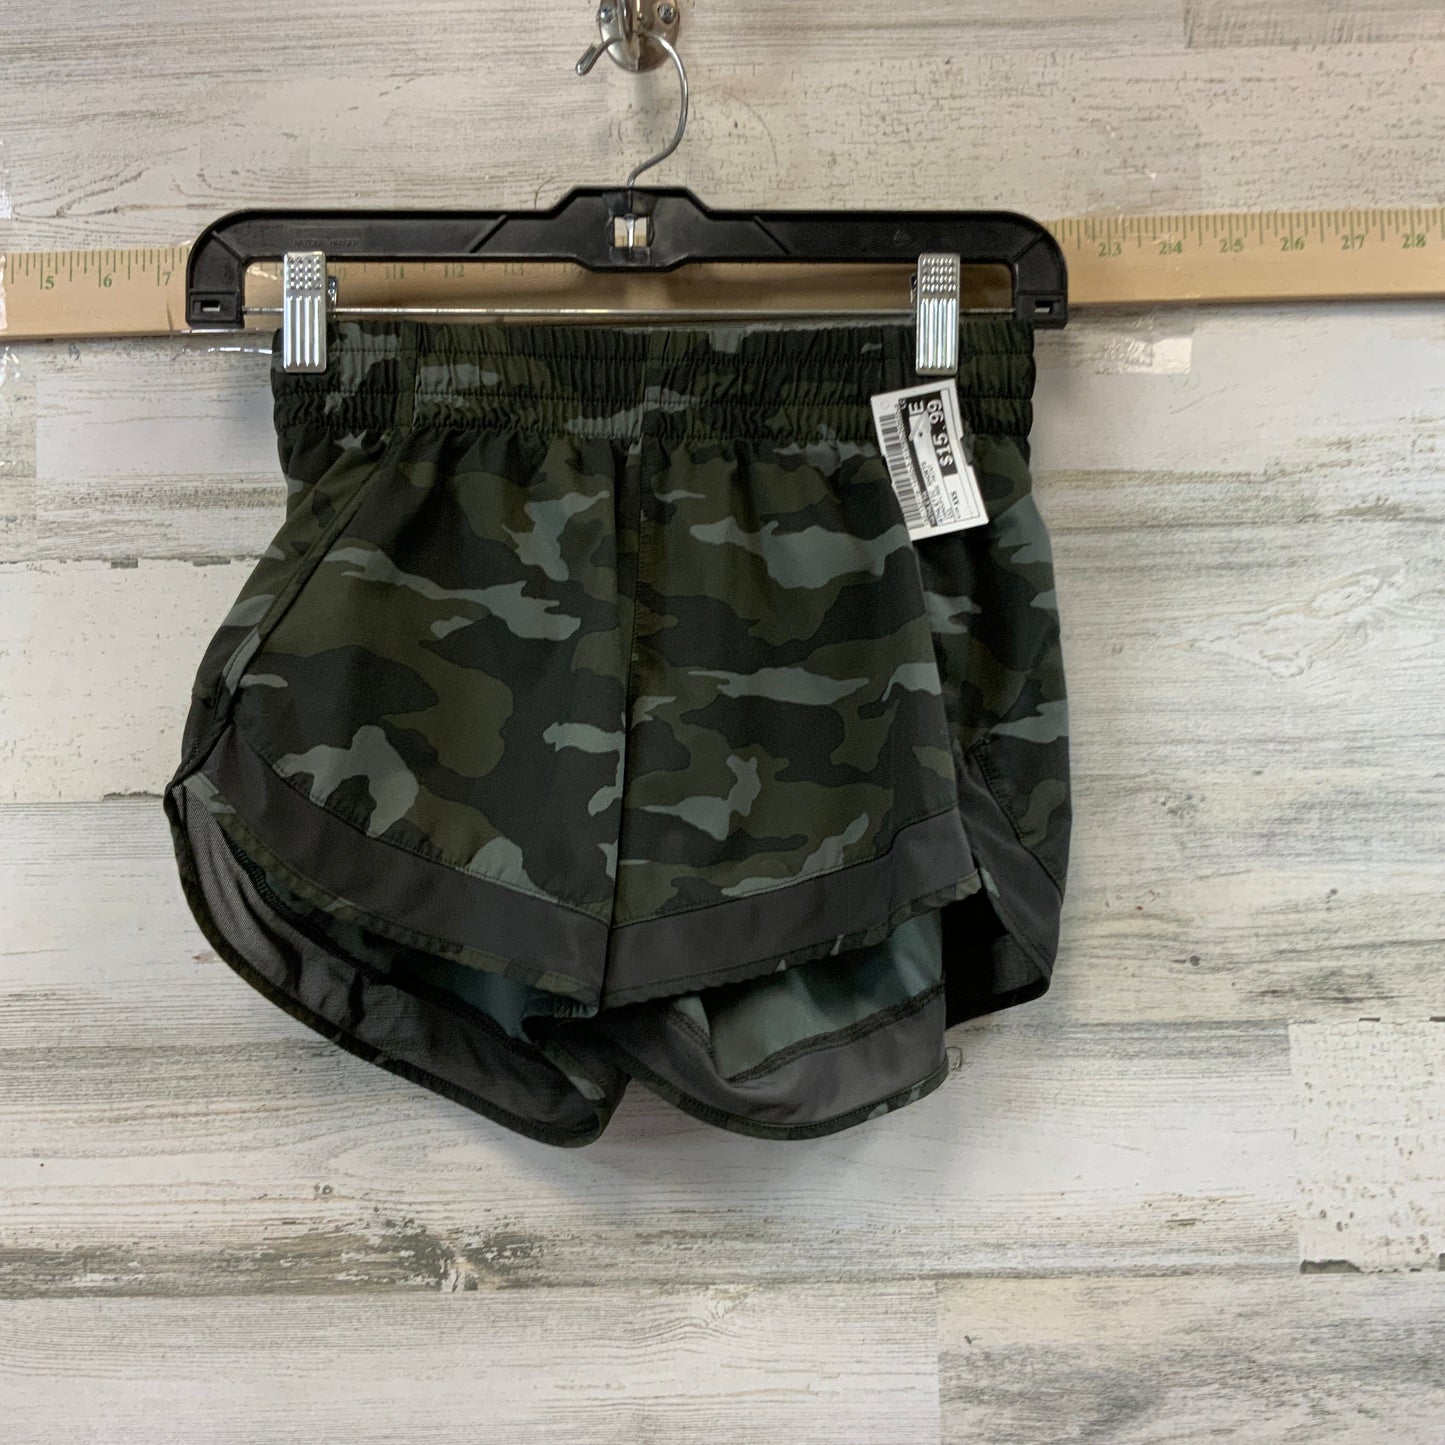 Camouflage Print Athletic Shorts Athleta, Size Xxs